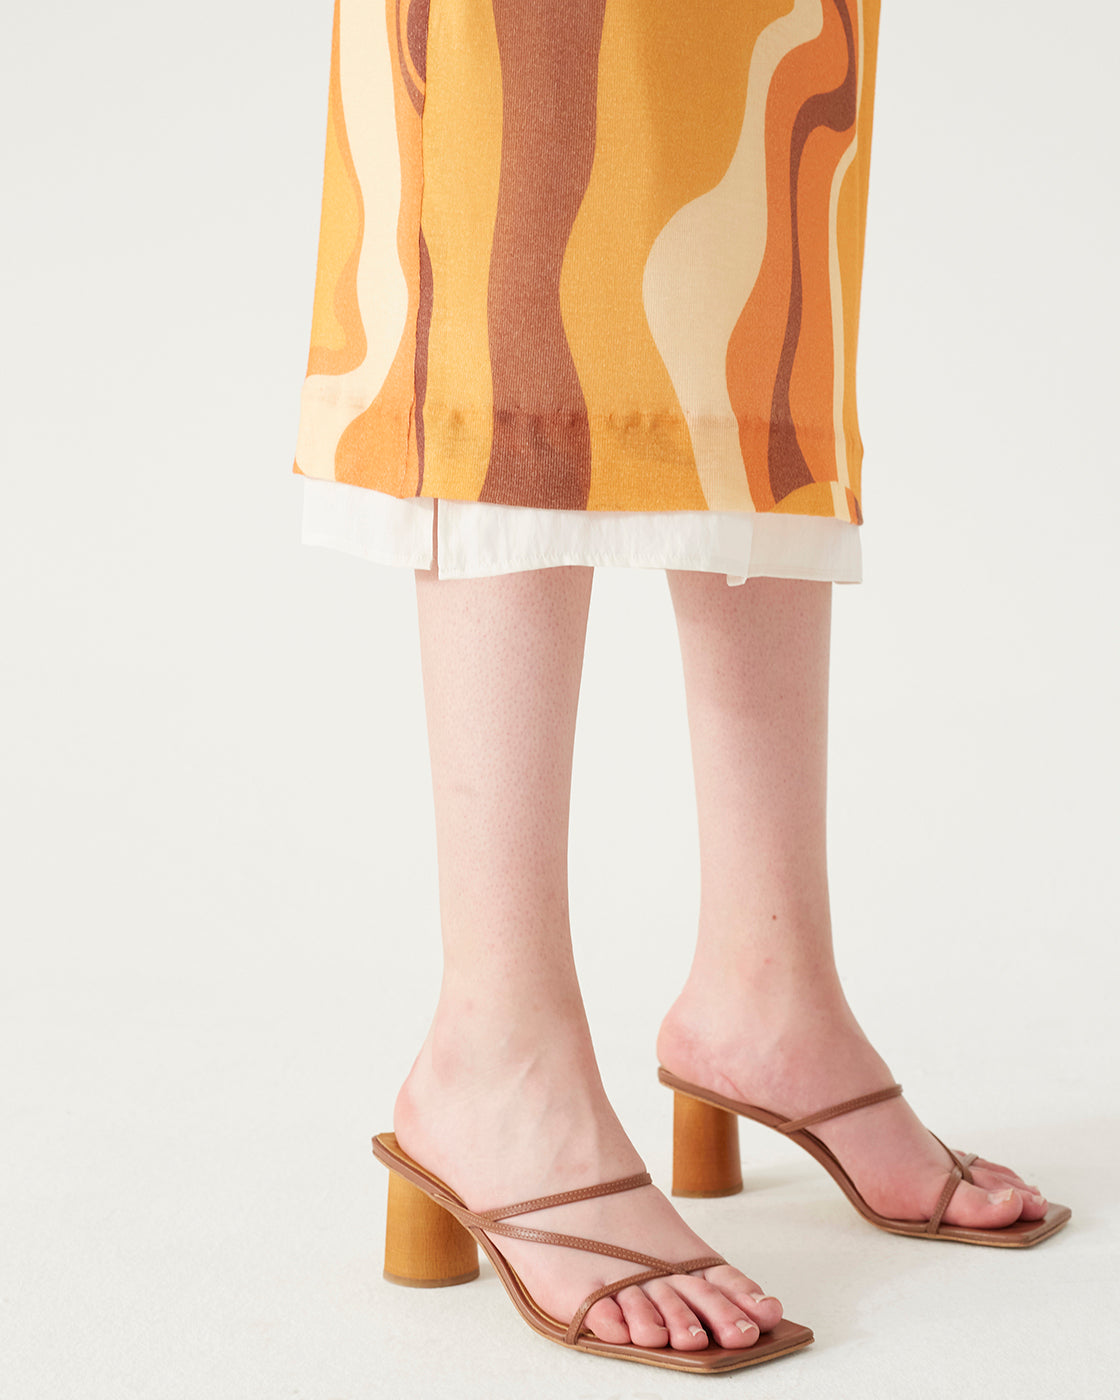 Mirren Skirt Tencel Print Orange